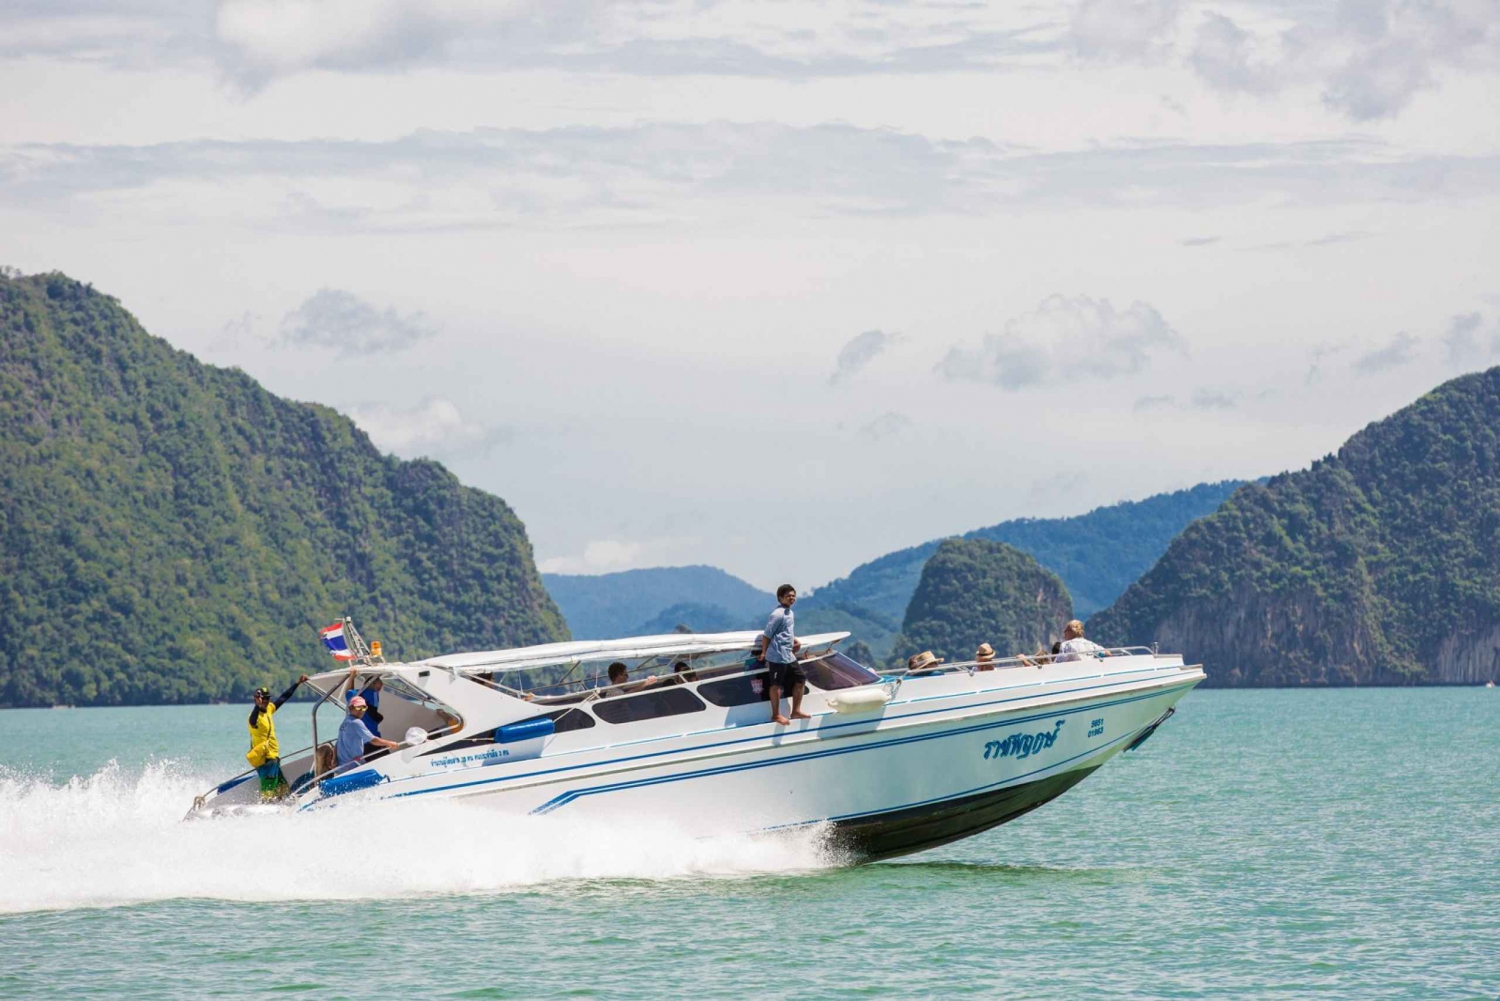 Baía de Phang Nga: Tour Ilha James Bond c/ Caiaque e Snorkel